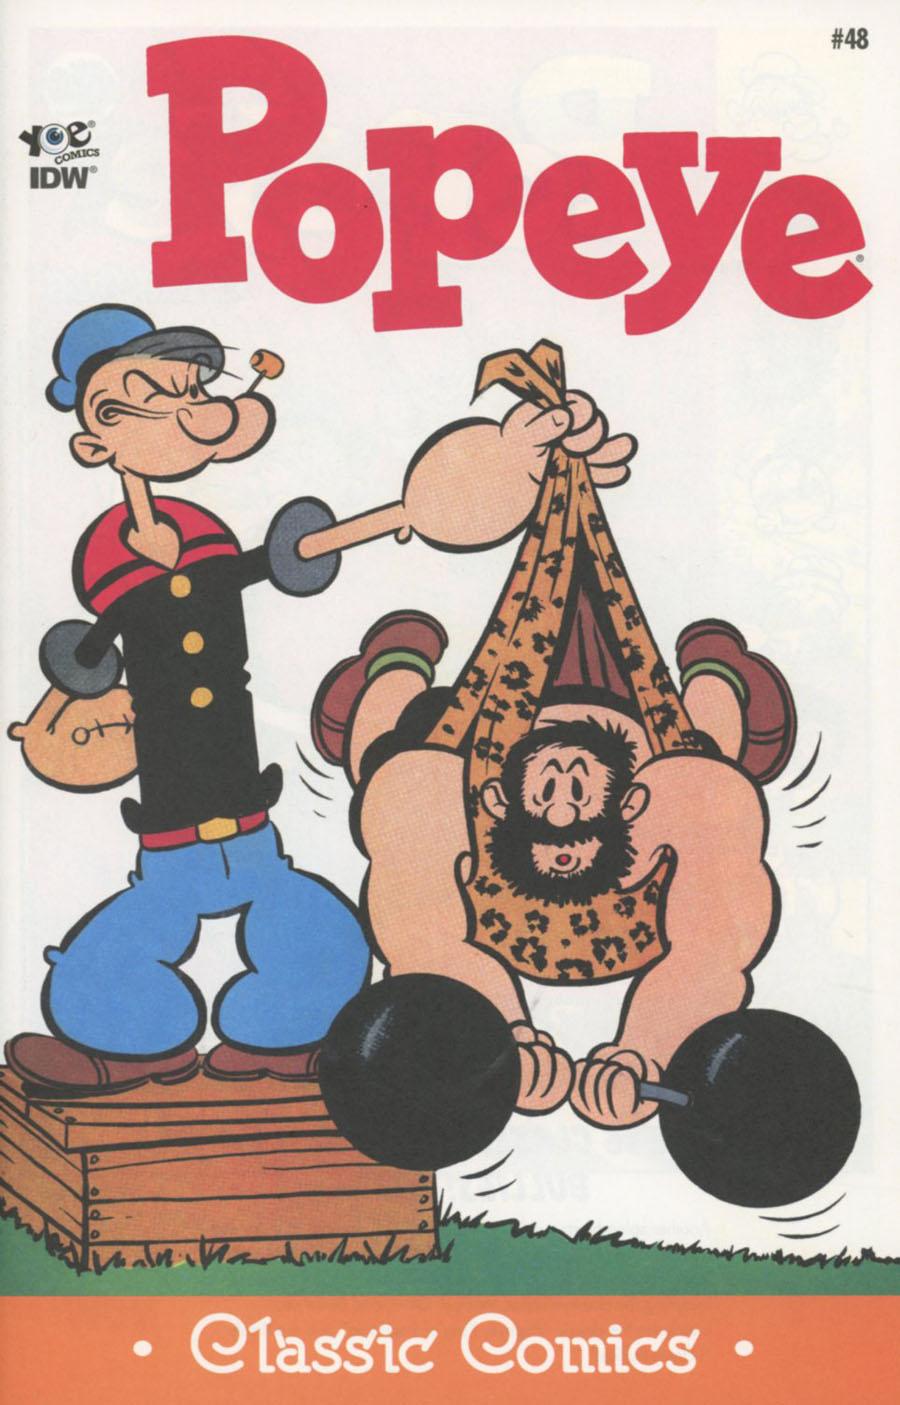 Classic Popeye Vol. 1 #48